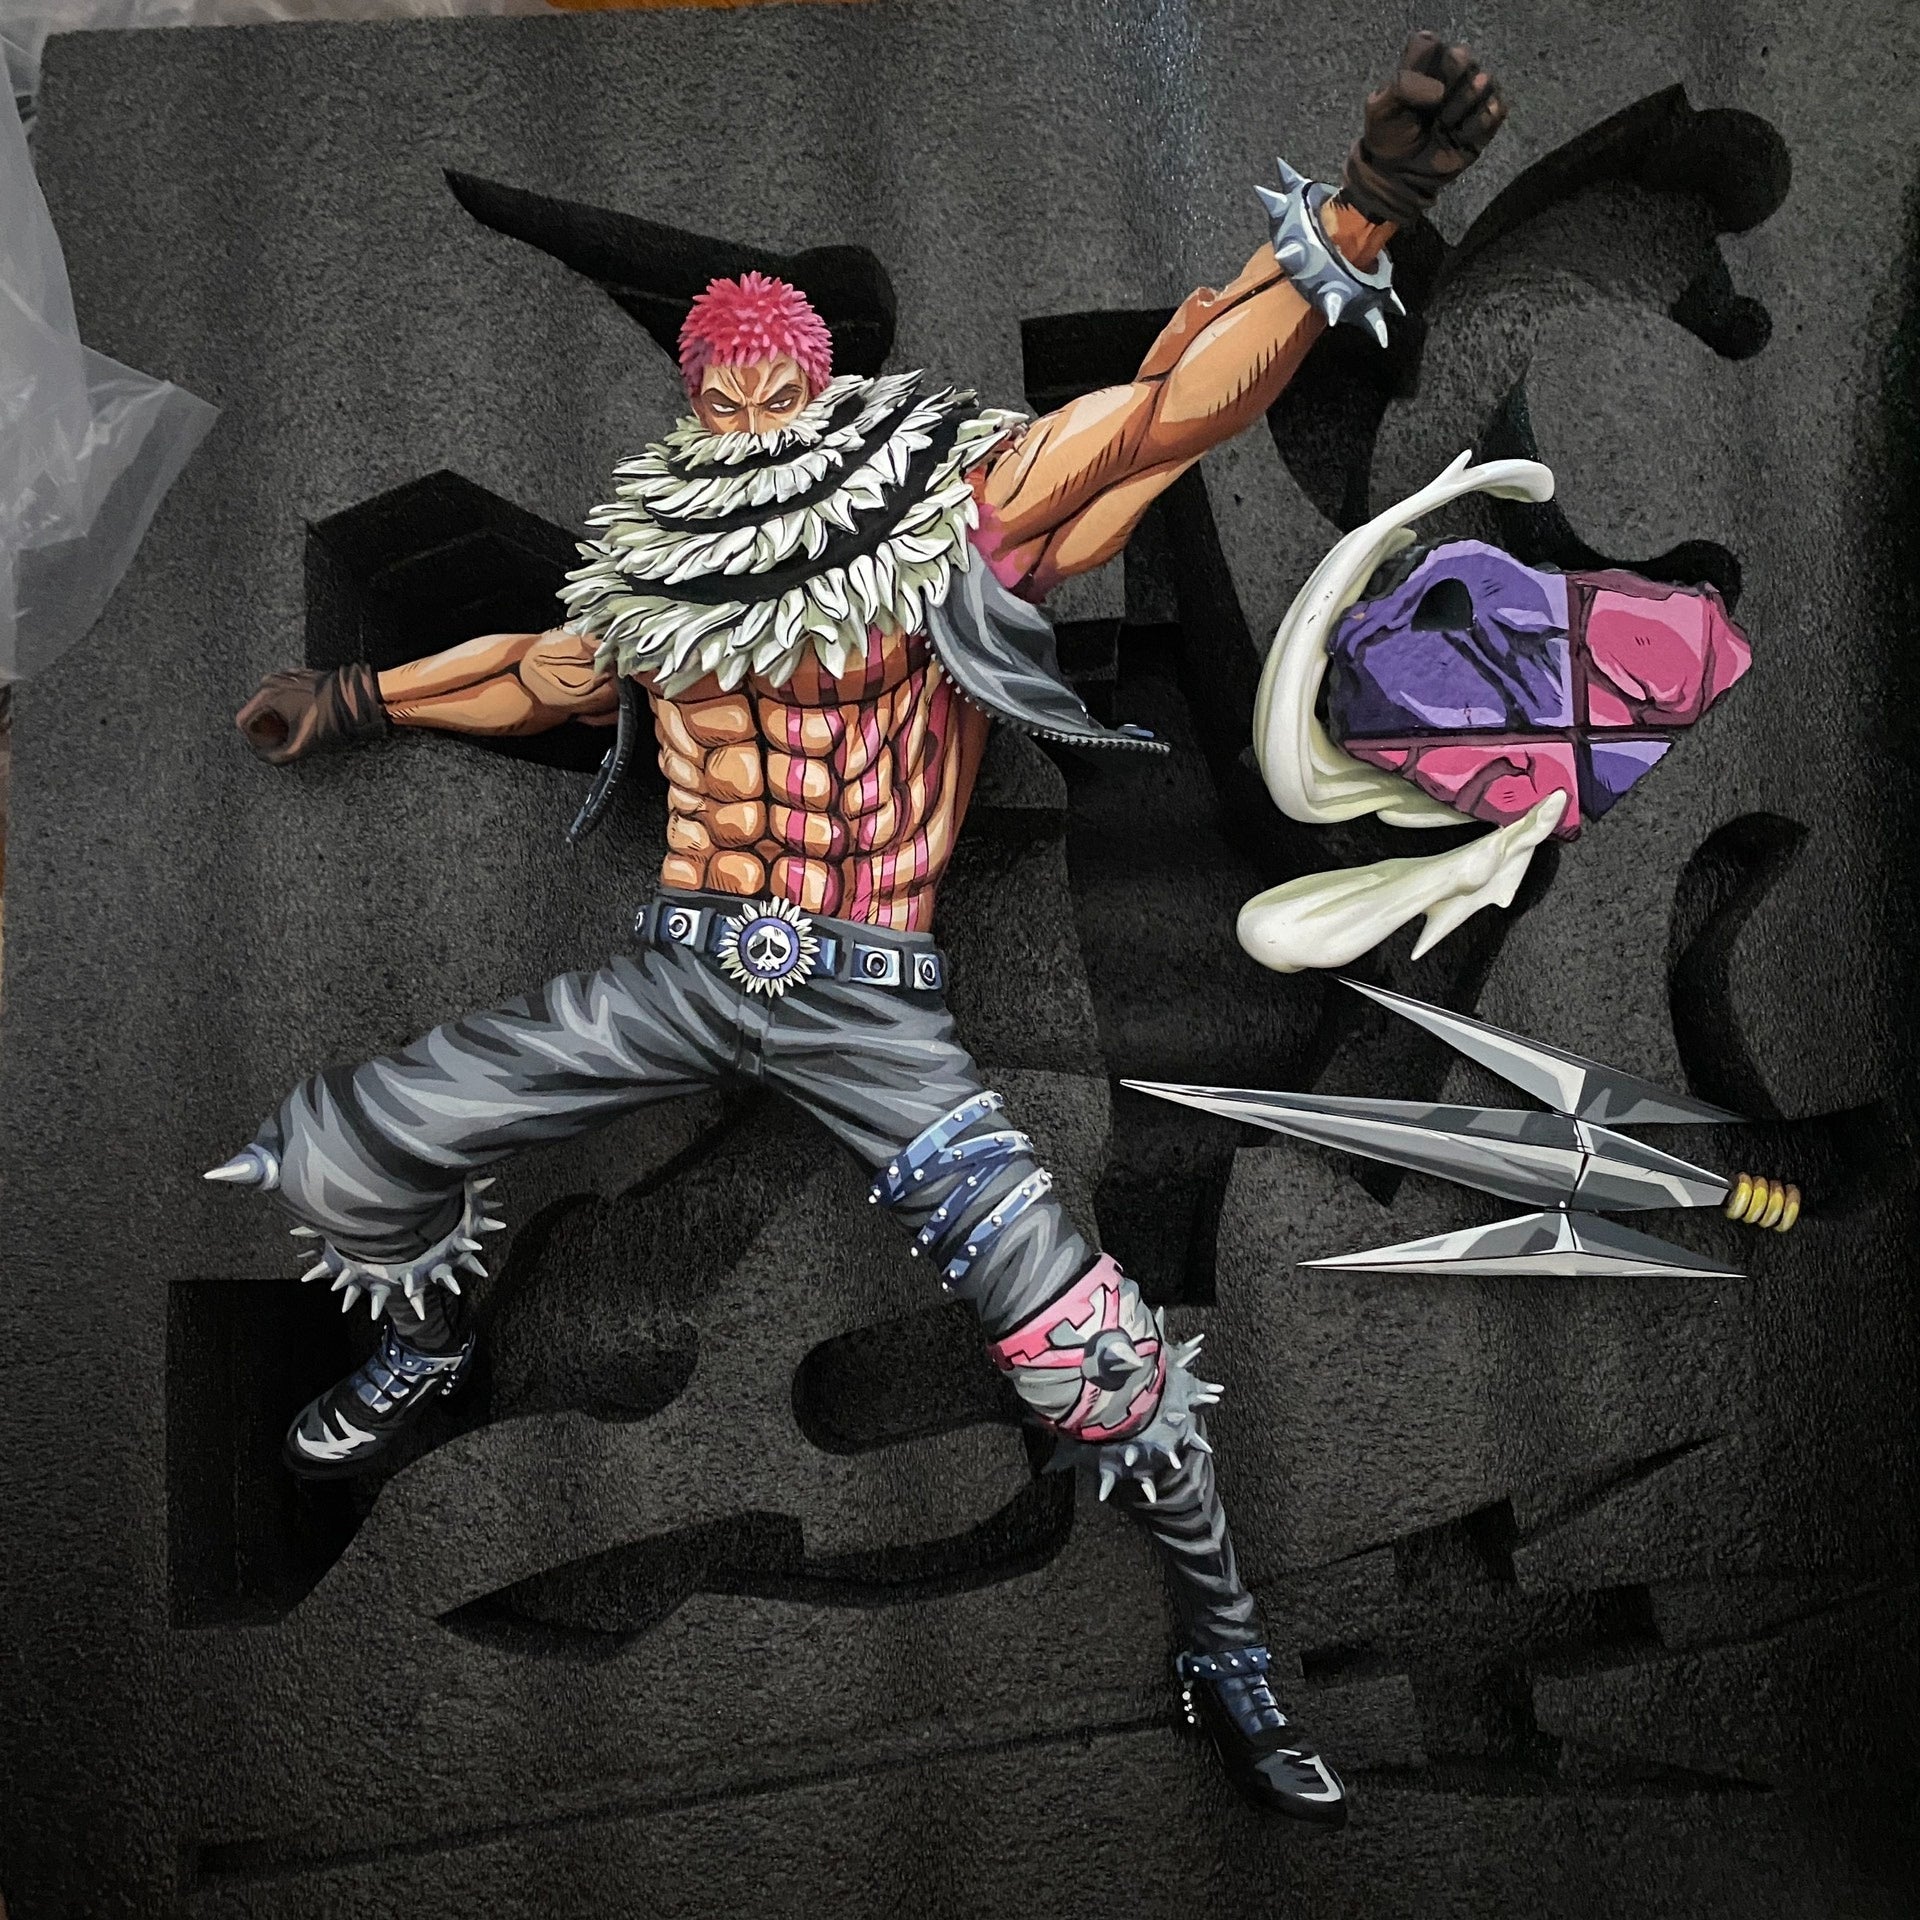 Action Figure Katakuri One Piece